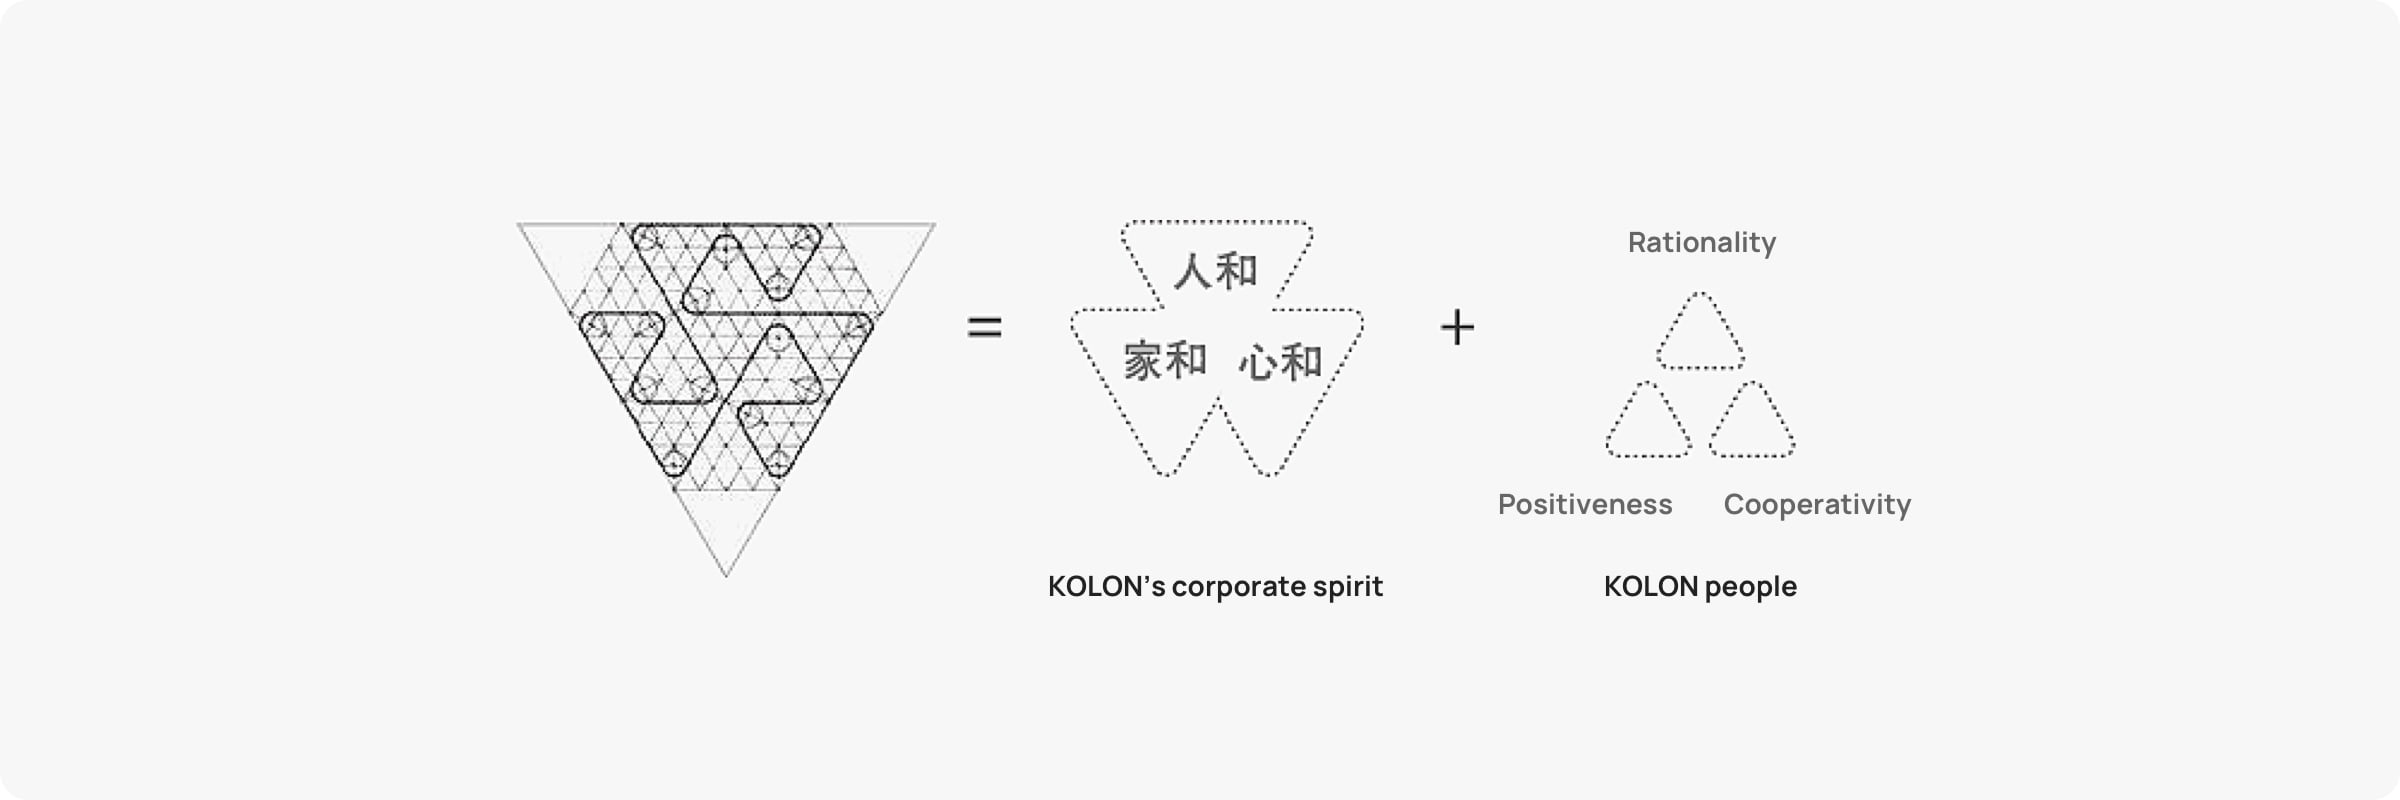 kolon entrepreneurhip, kolon person, Rationality Positiveness Cooperation